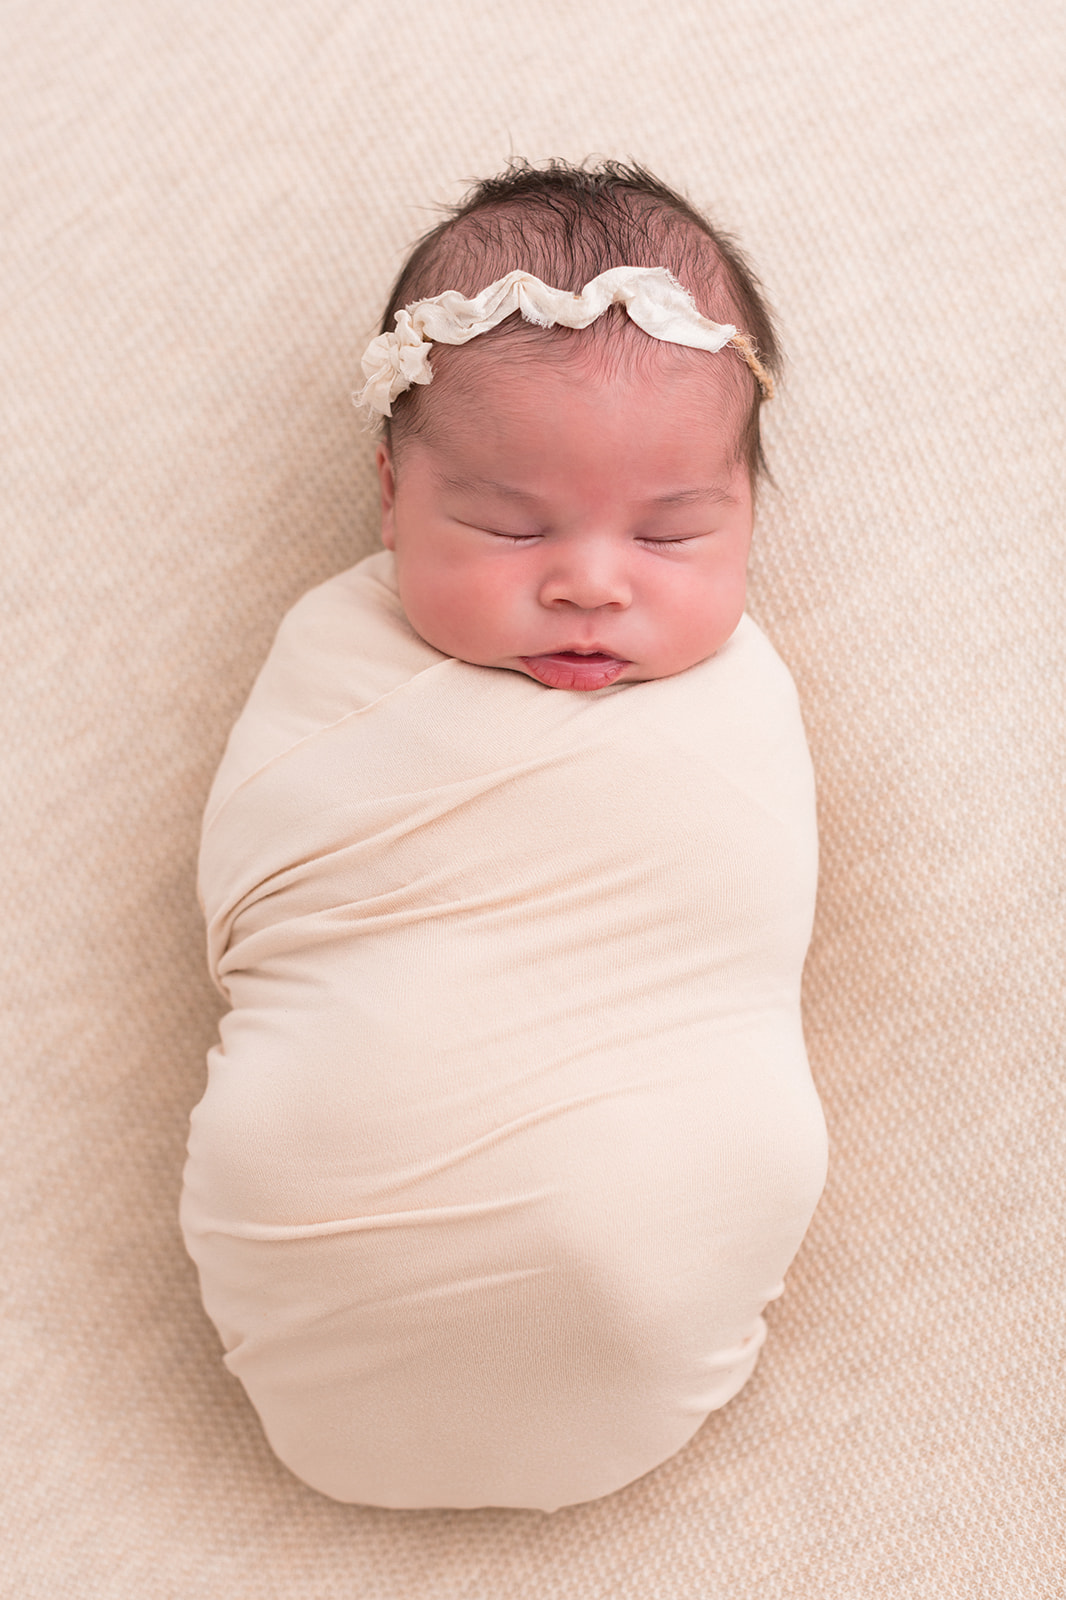 A newborn baby girl sleeps in a beige swaddle in a studio after using Portland OBGYN